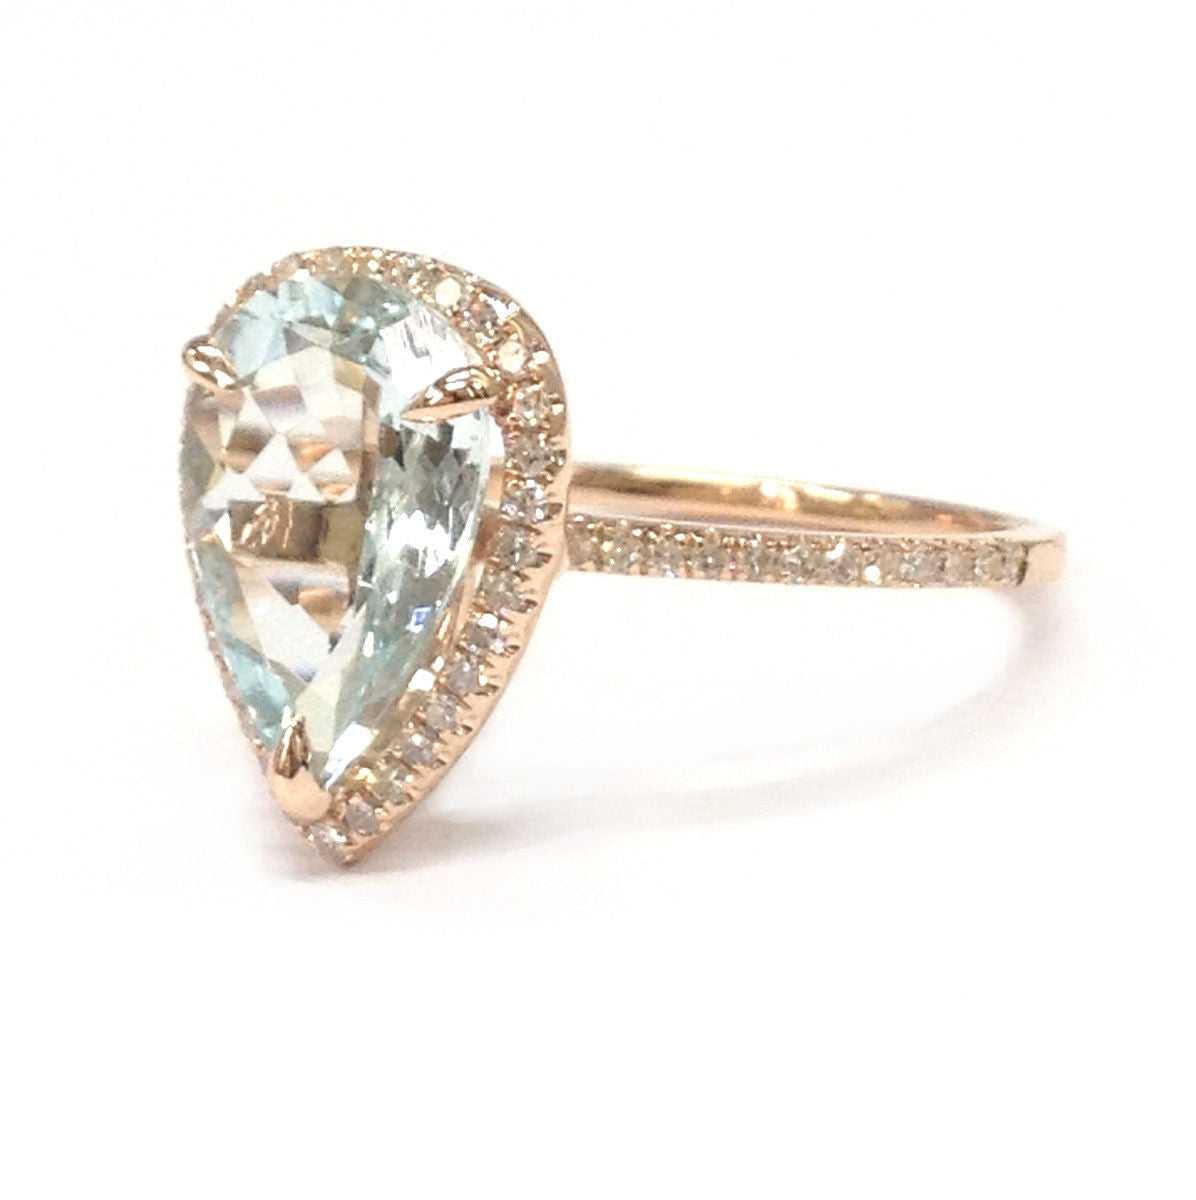 Pear Aquamarine Engagement Ring Pave Diamonds Wedding 14K Rose Gold,10x12mm - Lord of Gem Rings - 2